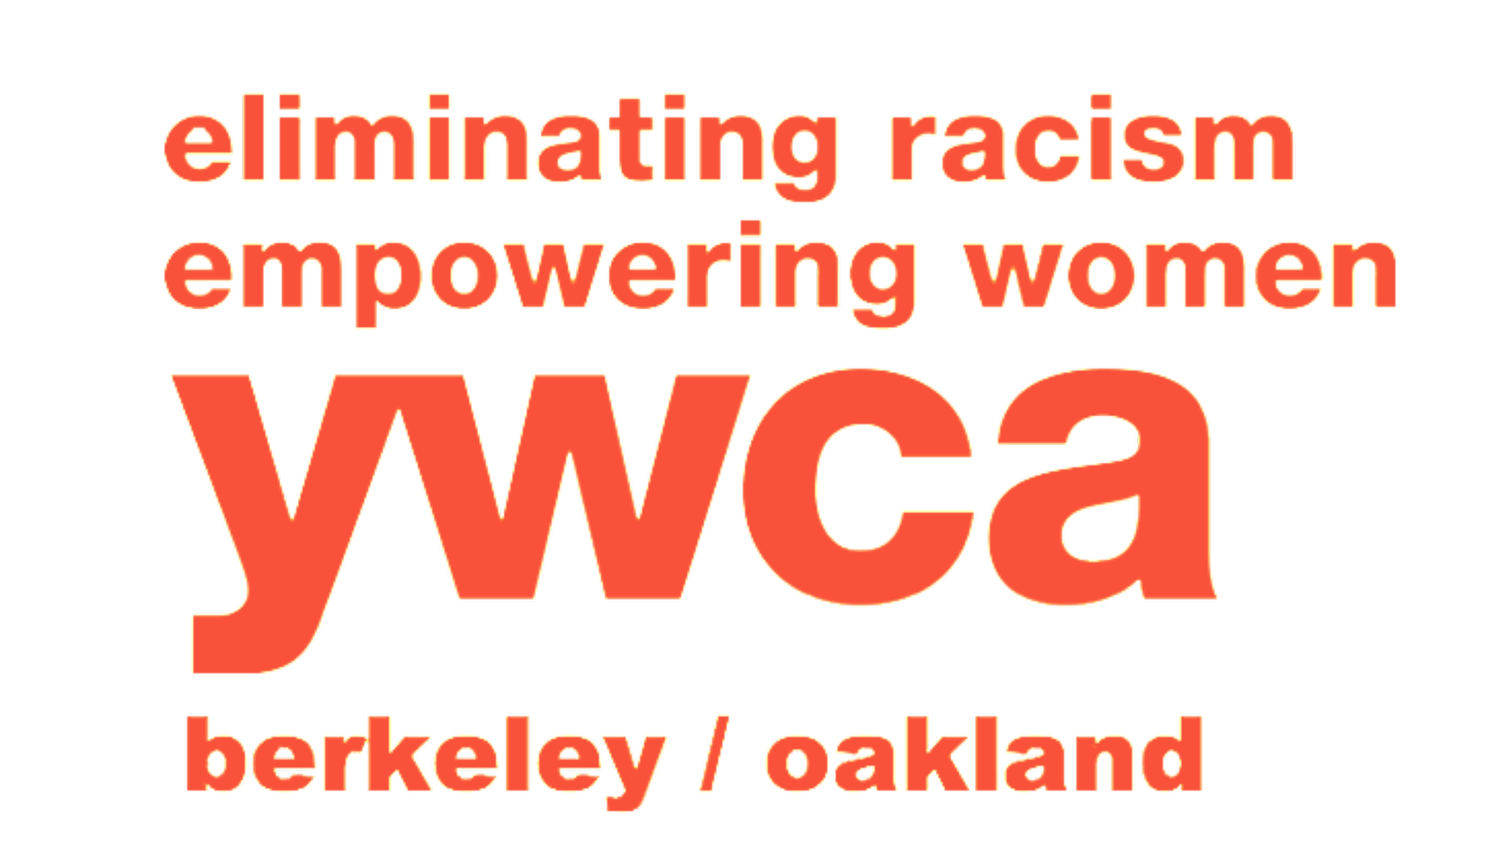 YWCA Berkeley/Oakland